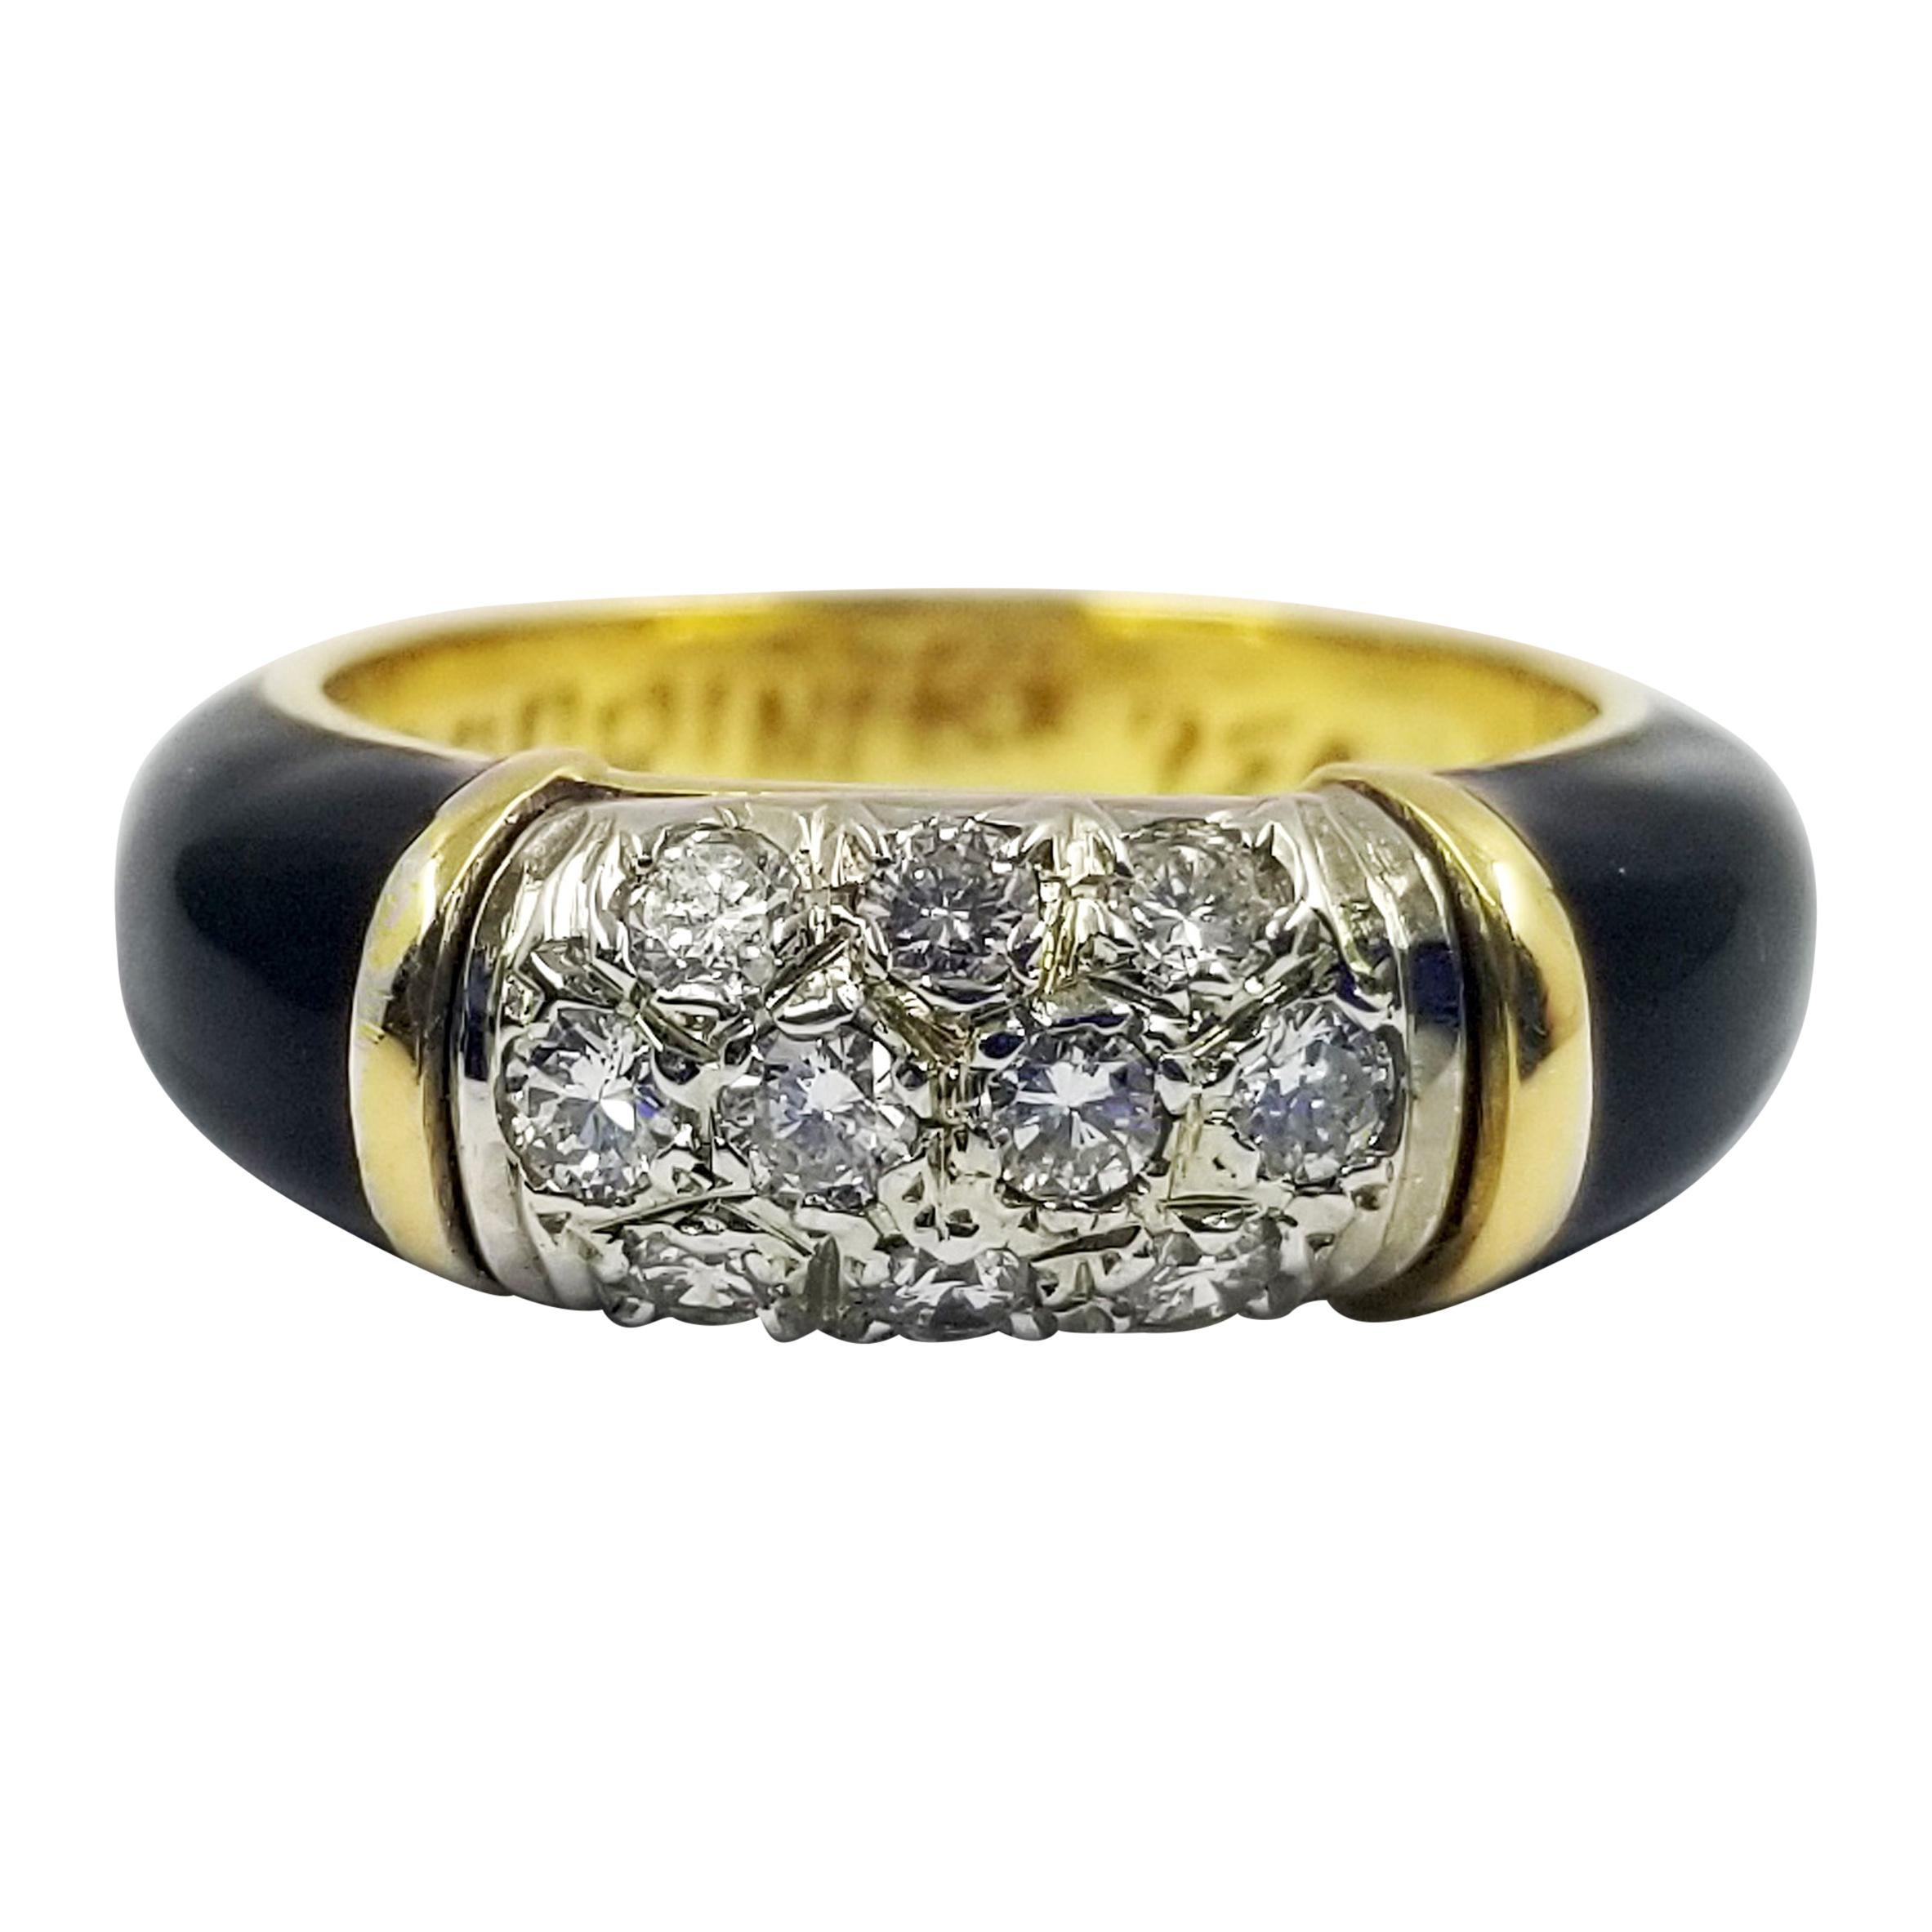 Torrini Black Enamel Ring with Pave Diamond Center